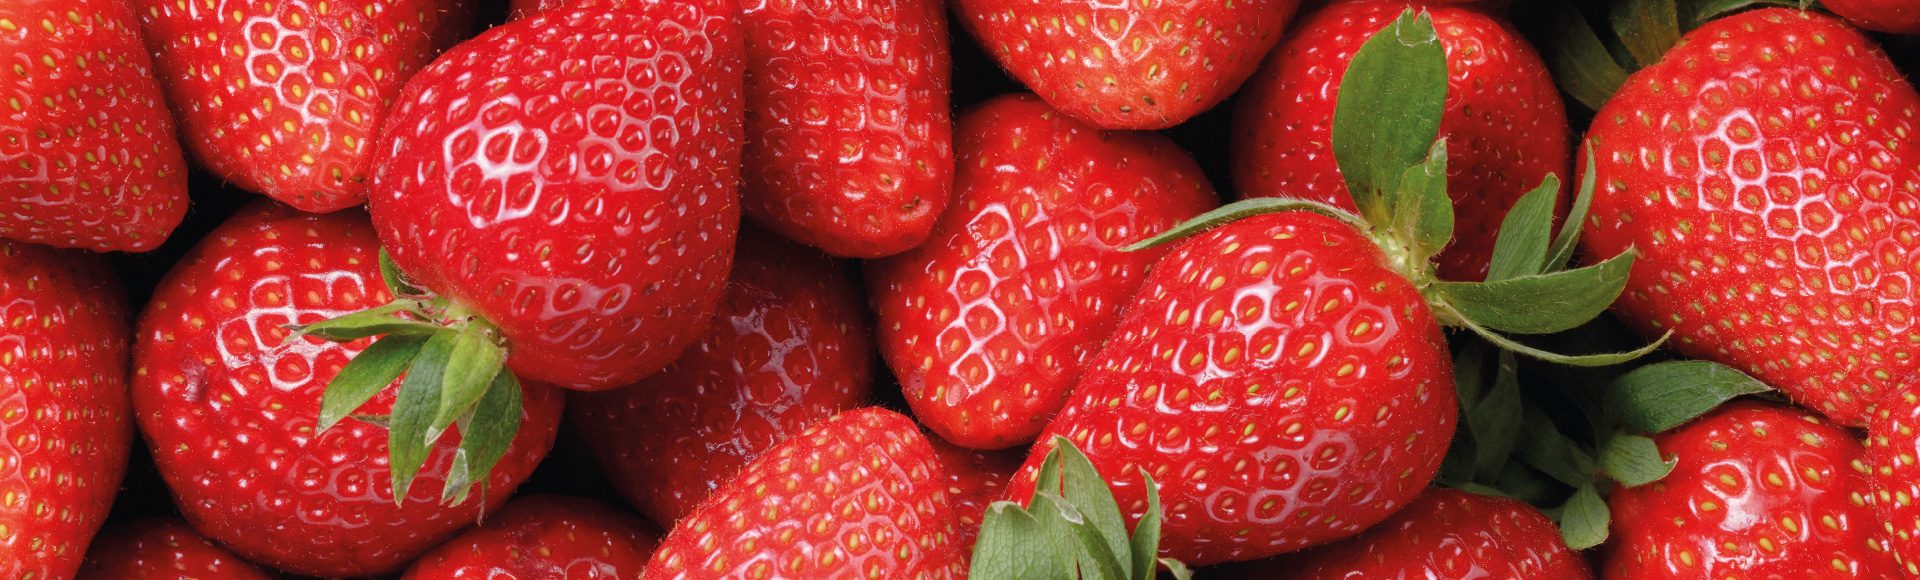 strawberry fertiliser and crop nutrition